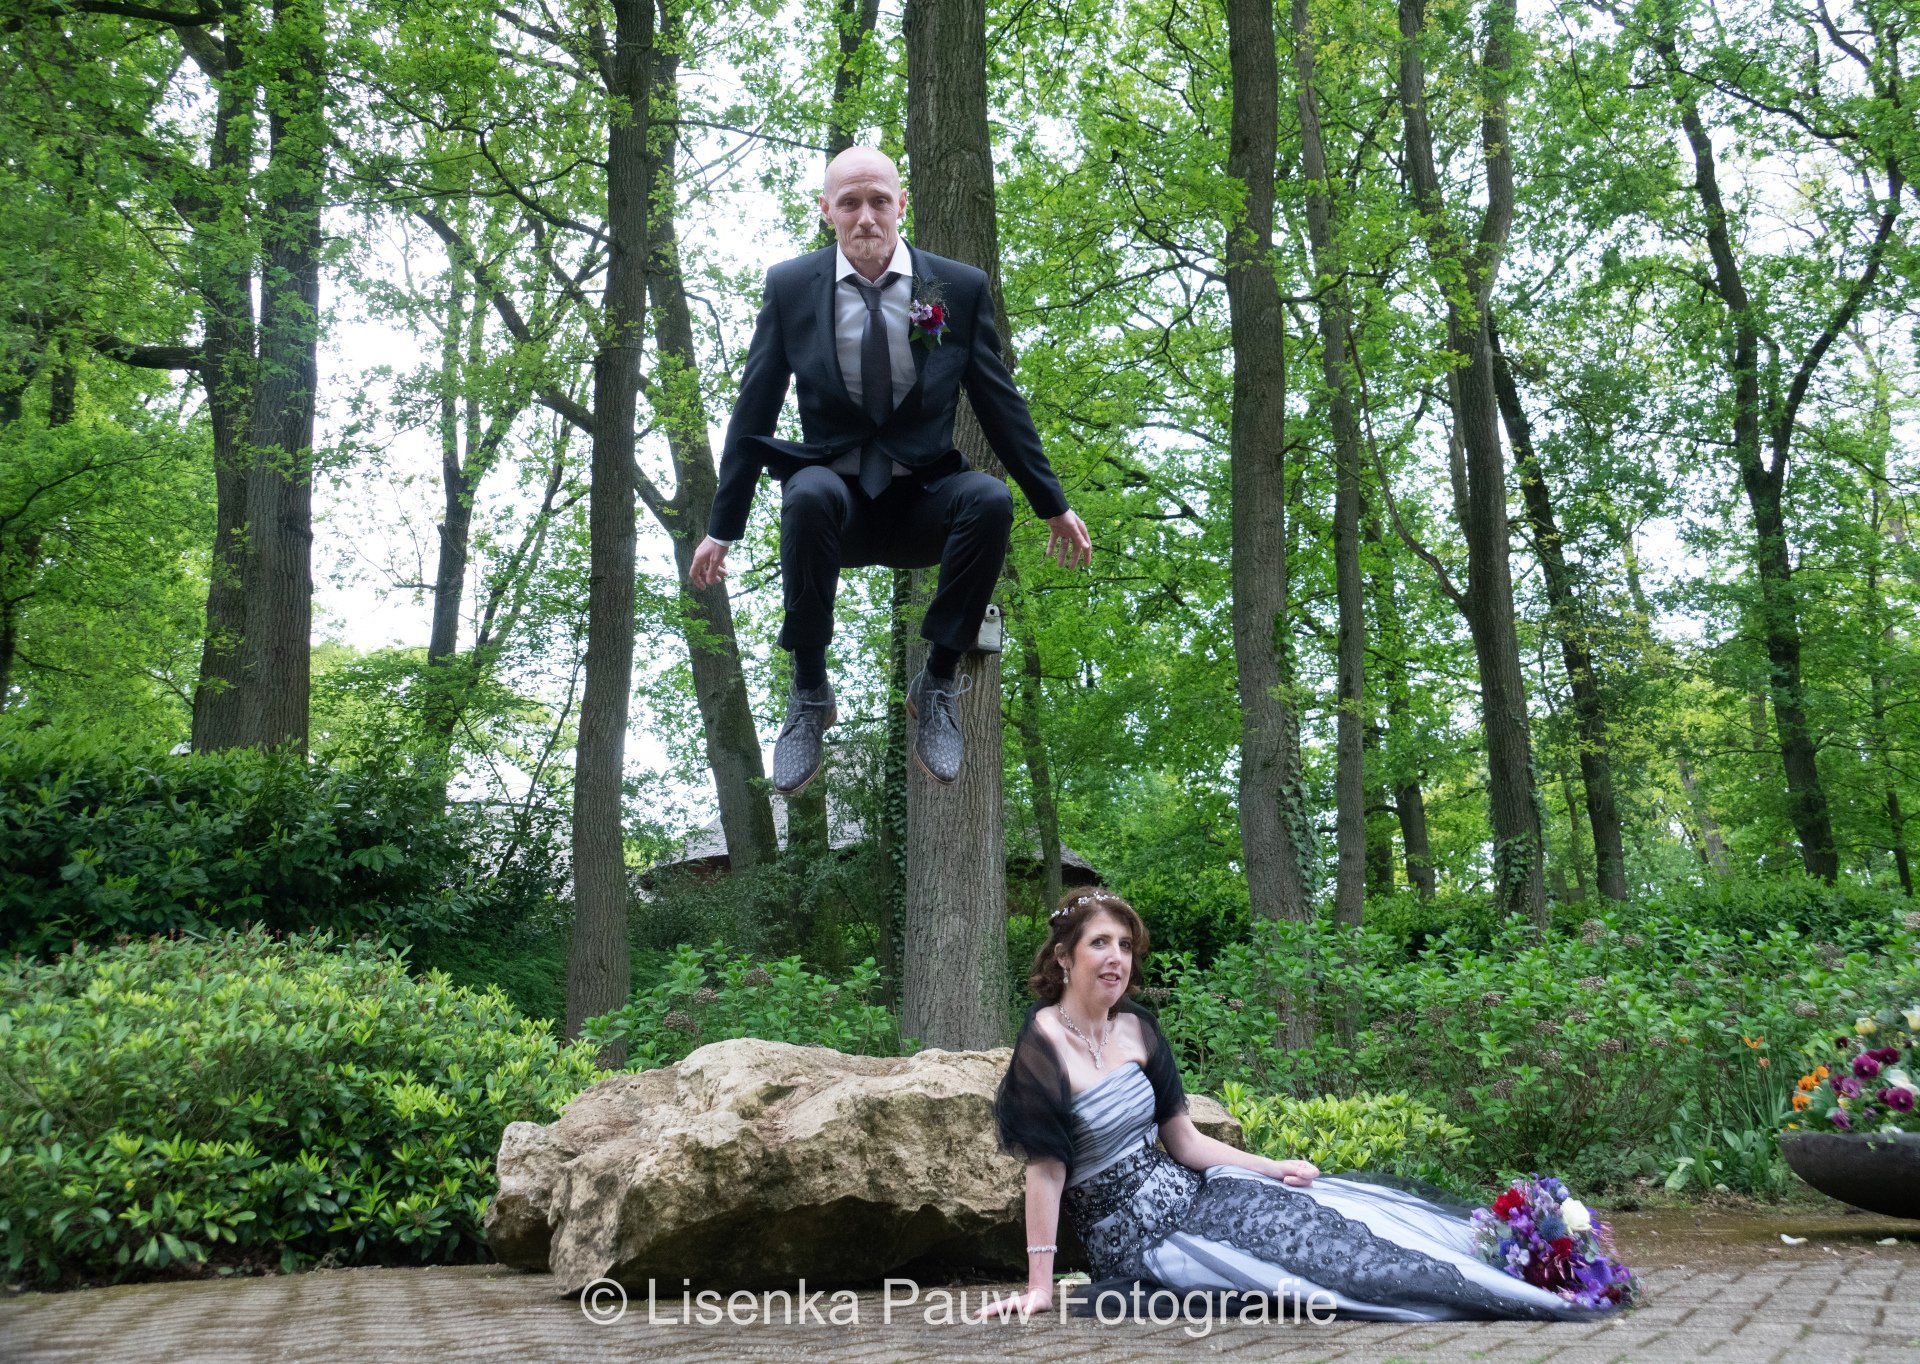 trouwfoto springen, trouwen, liefde, trouwfotograaf, Lisenka Pauw Fotografie